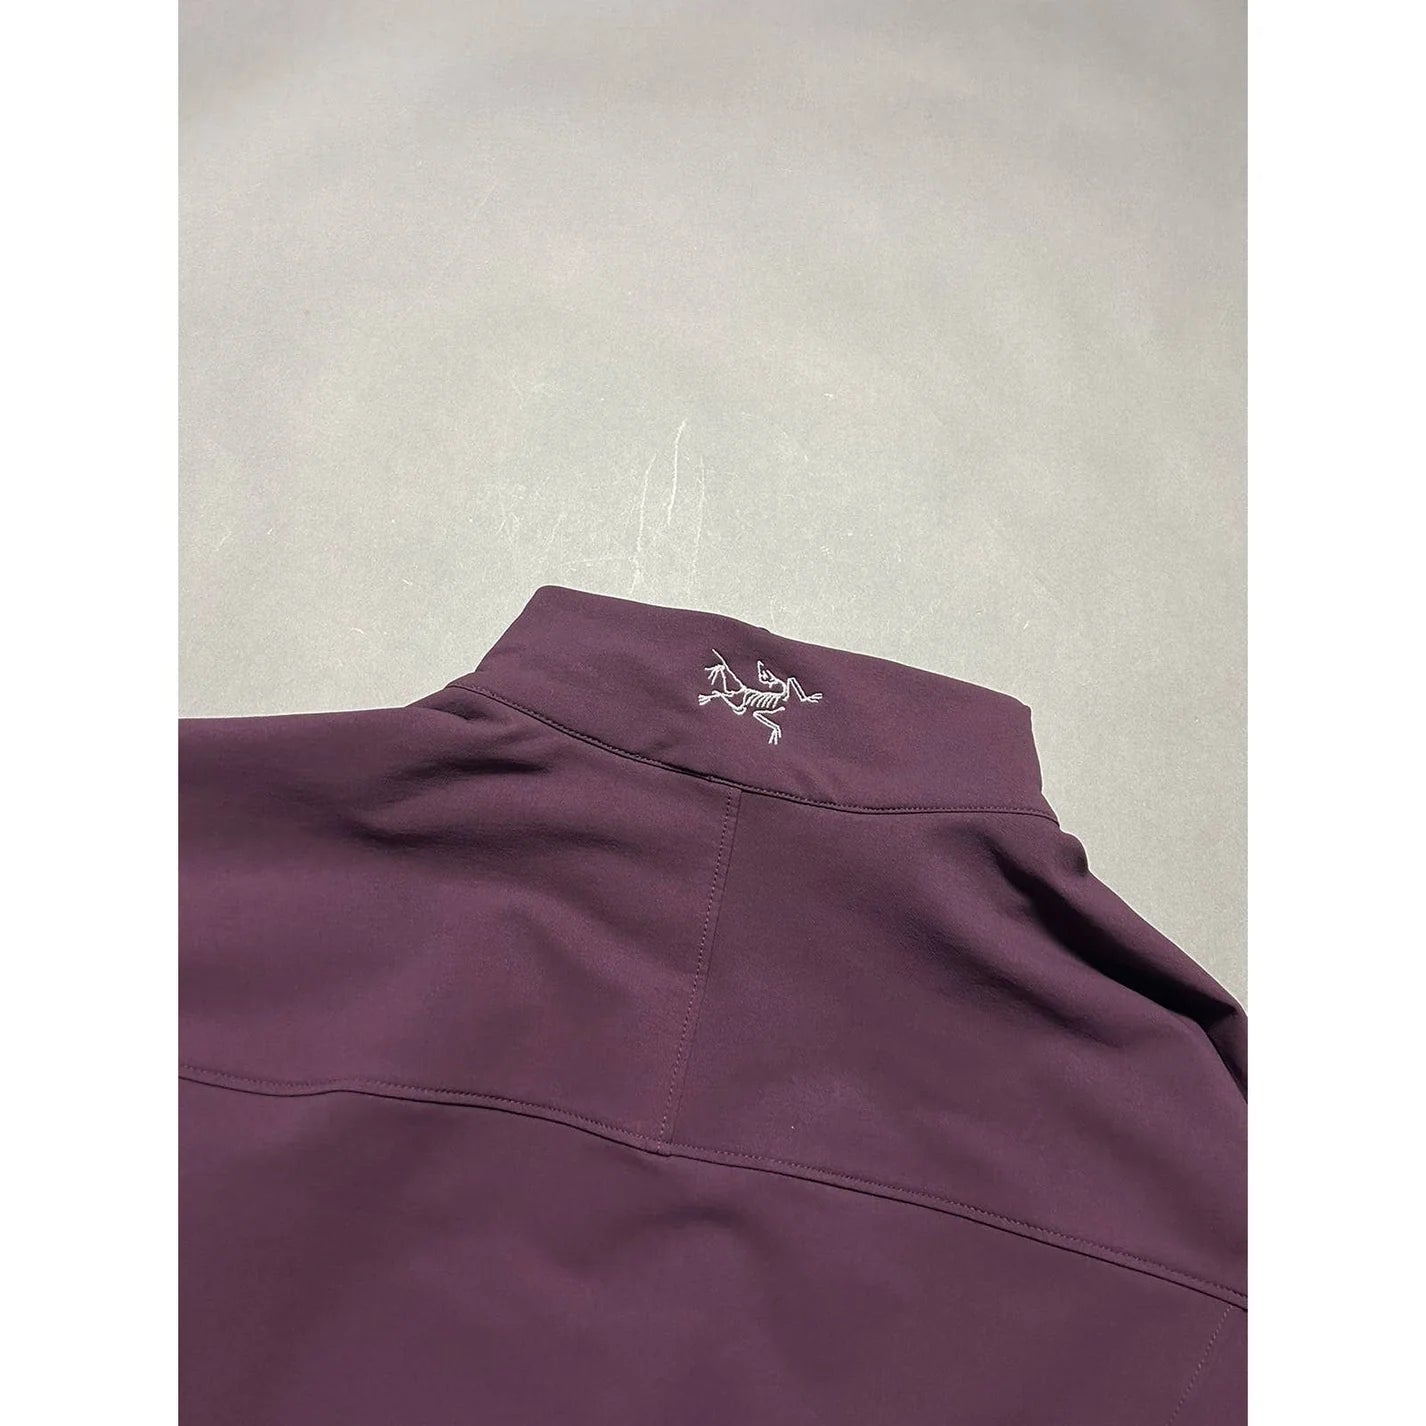 Arc’teryx Jacket Softshell Purple Vintage Lodz Polska Front tyl Logo